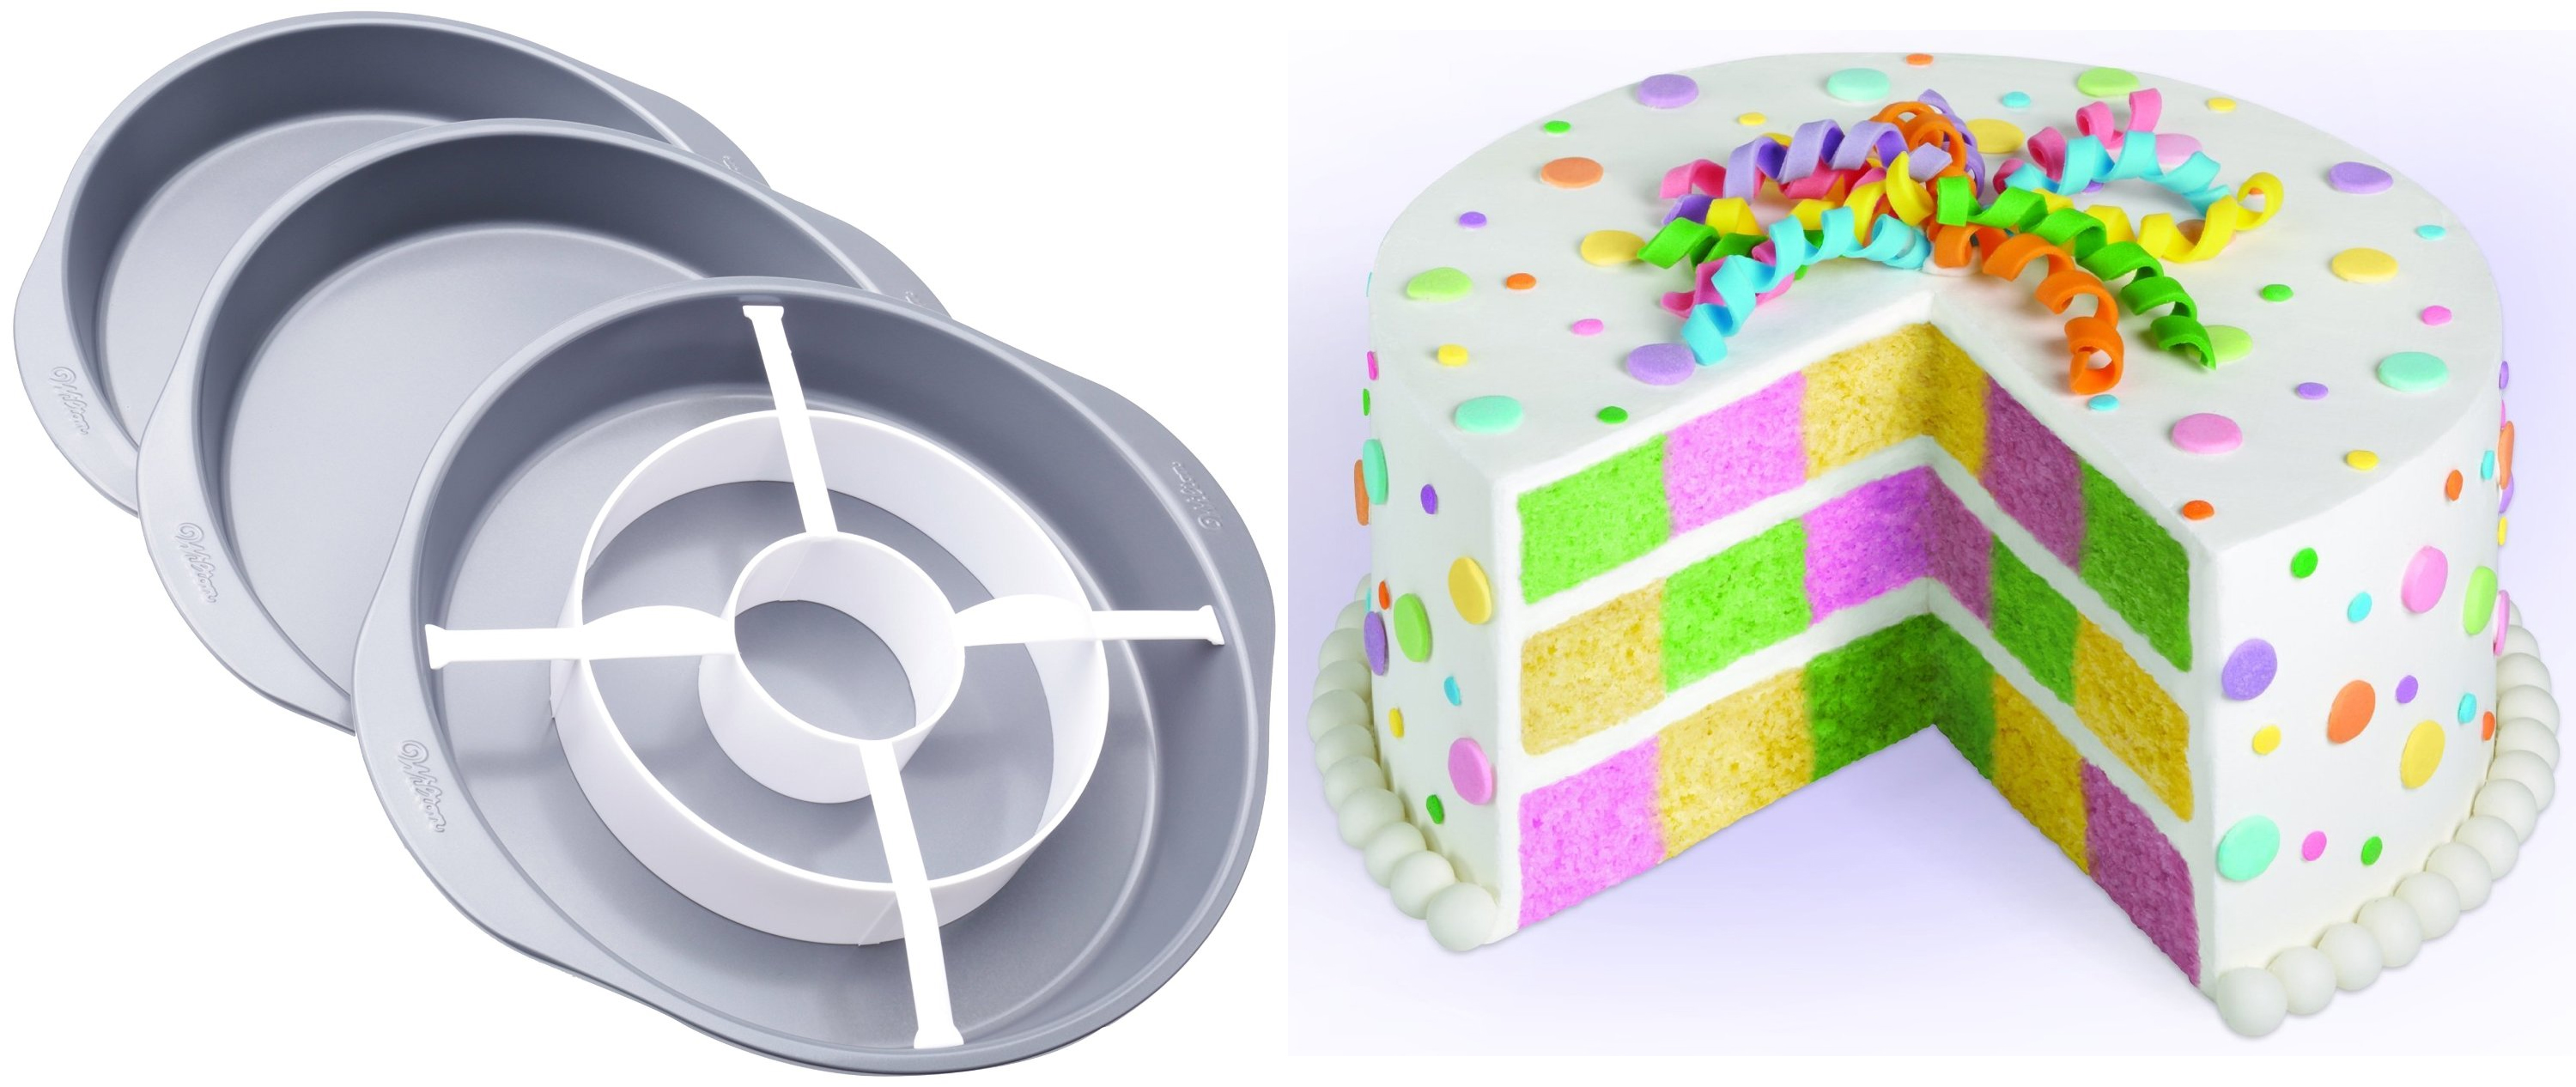 best gadget for baking Cupcake and cake Checkerboard Cake Pan Set